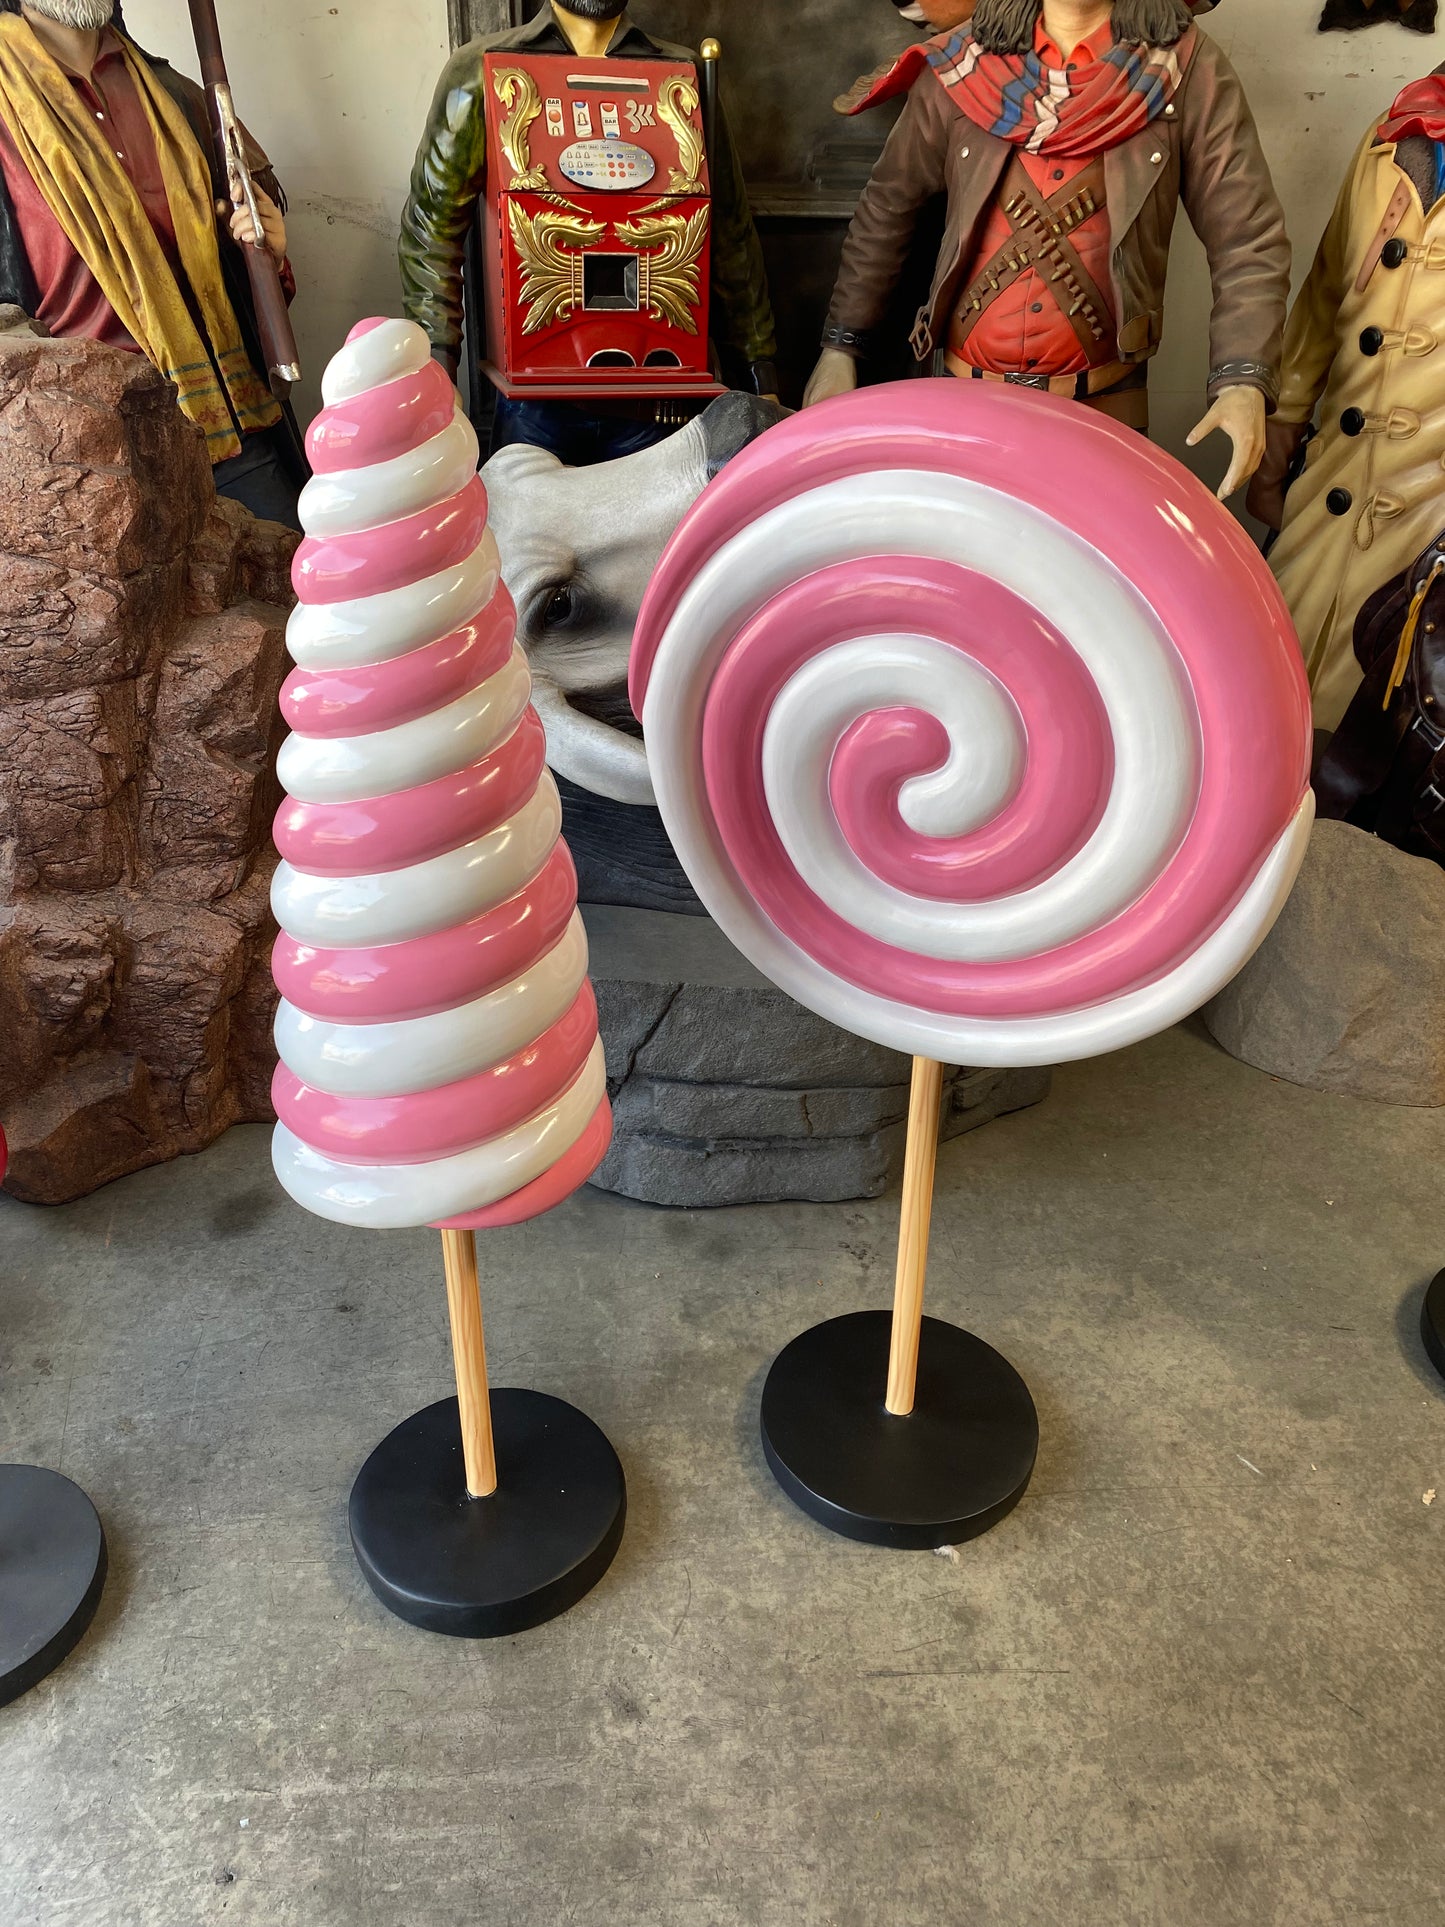 Small Pink Twirl Lollipop Statue